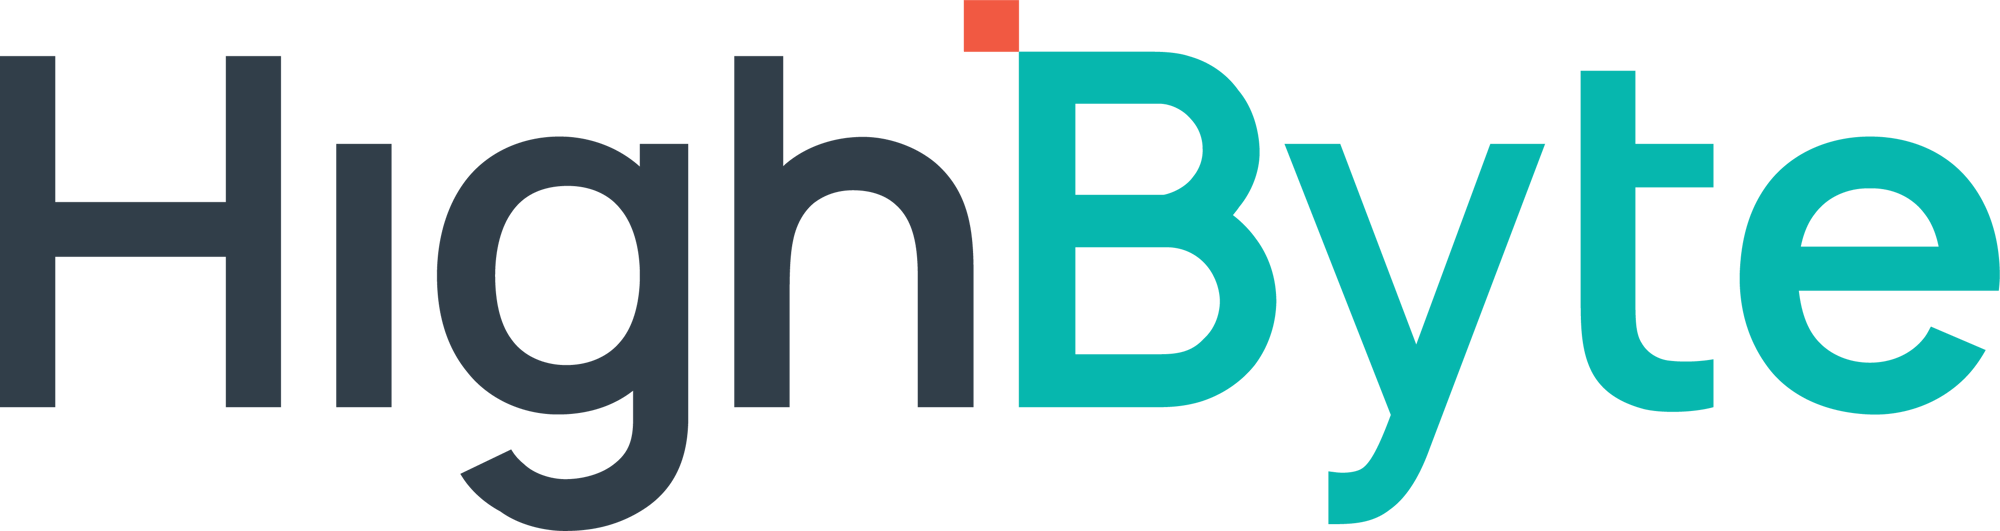 HighByte.Logo.Color-min